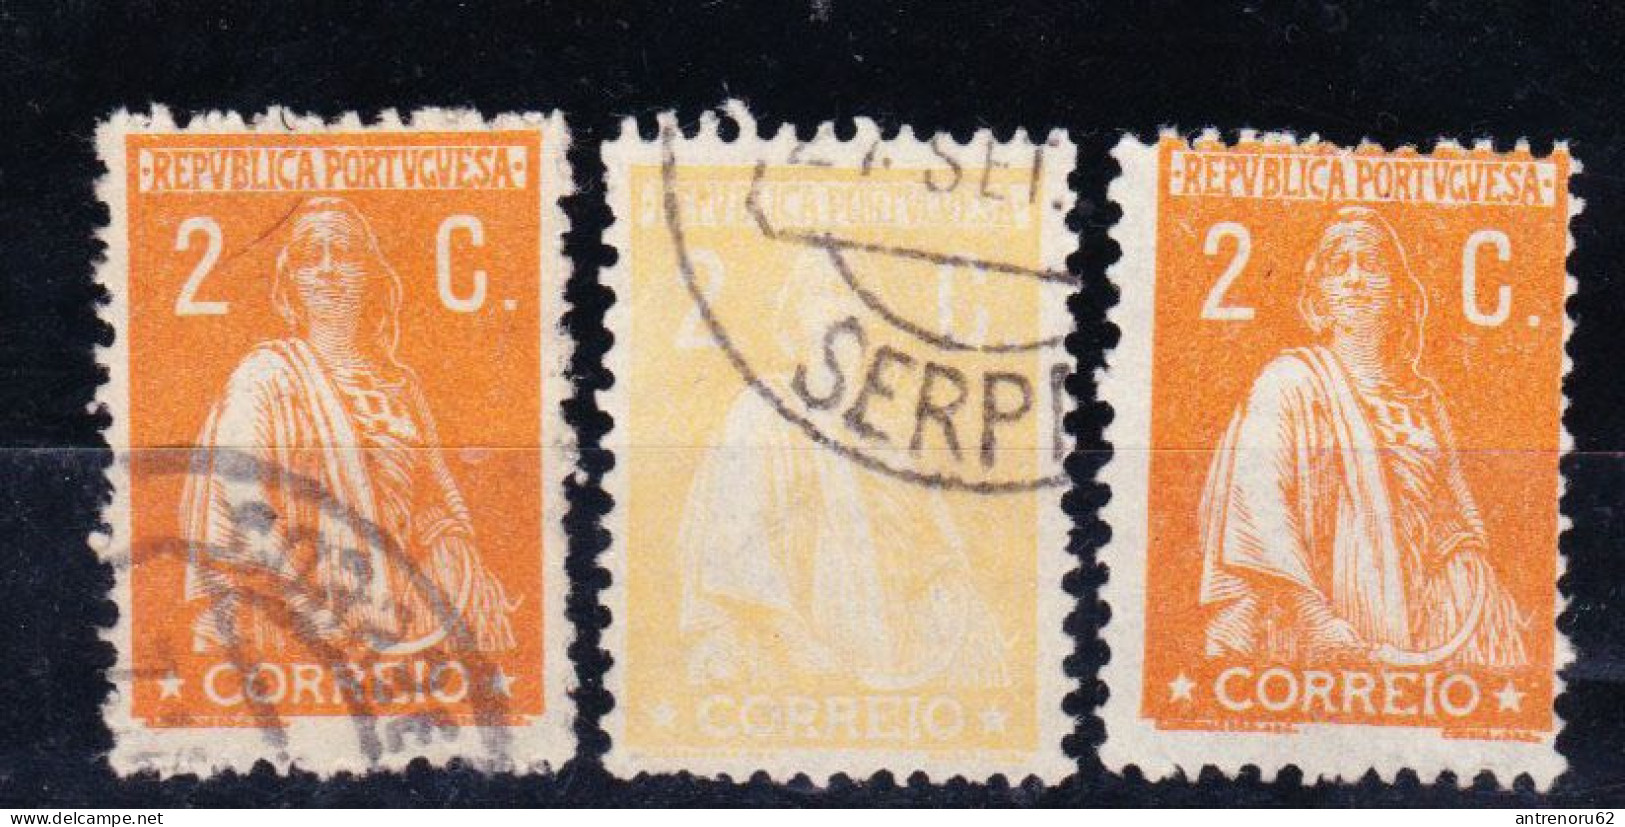 STAMPS-1917-PORTUGAL-ERROR-USED(NORMAL IS ORANGE)-SEE-SCAN - Unused Stamps